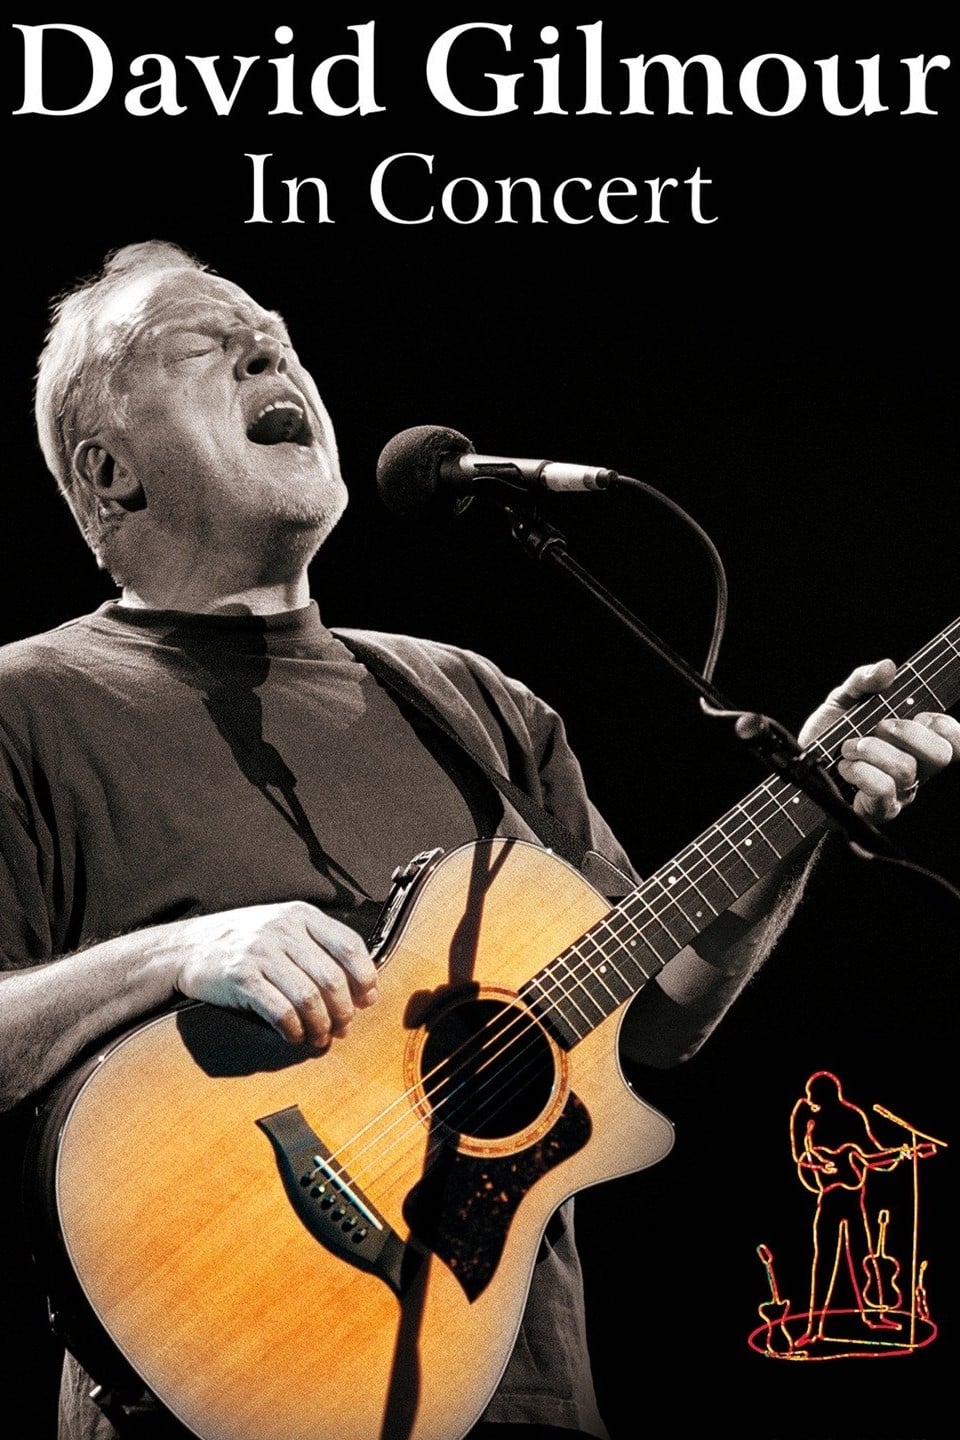 David Gilmour: In Concert